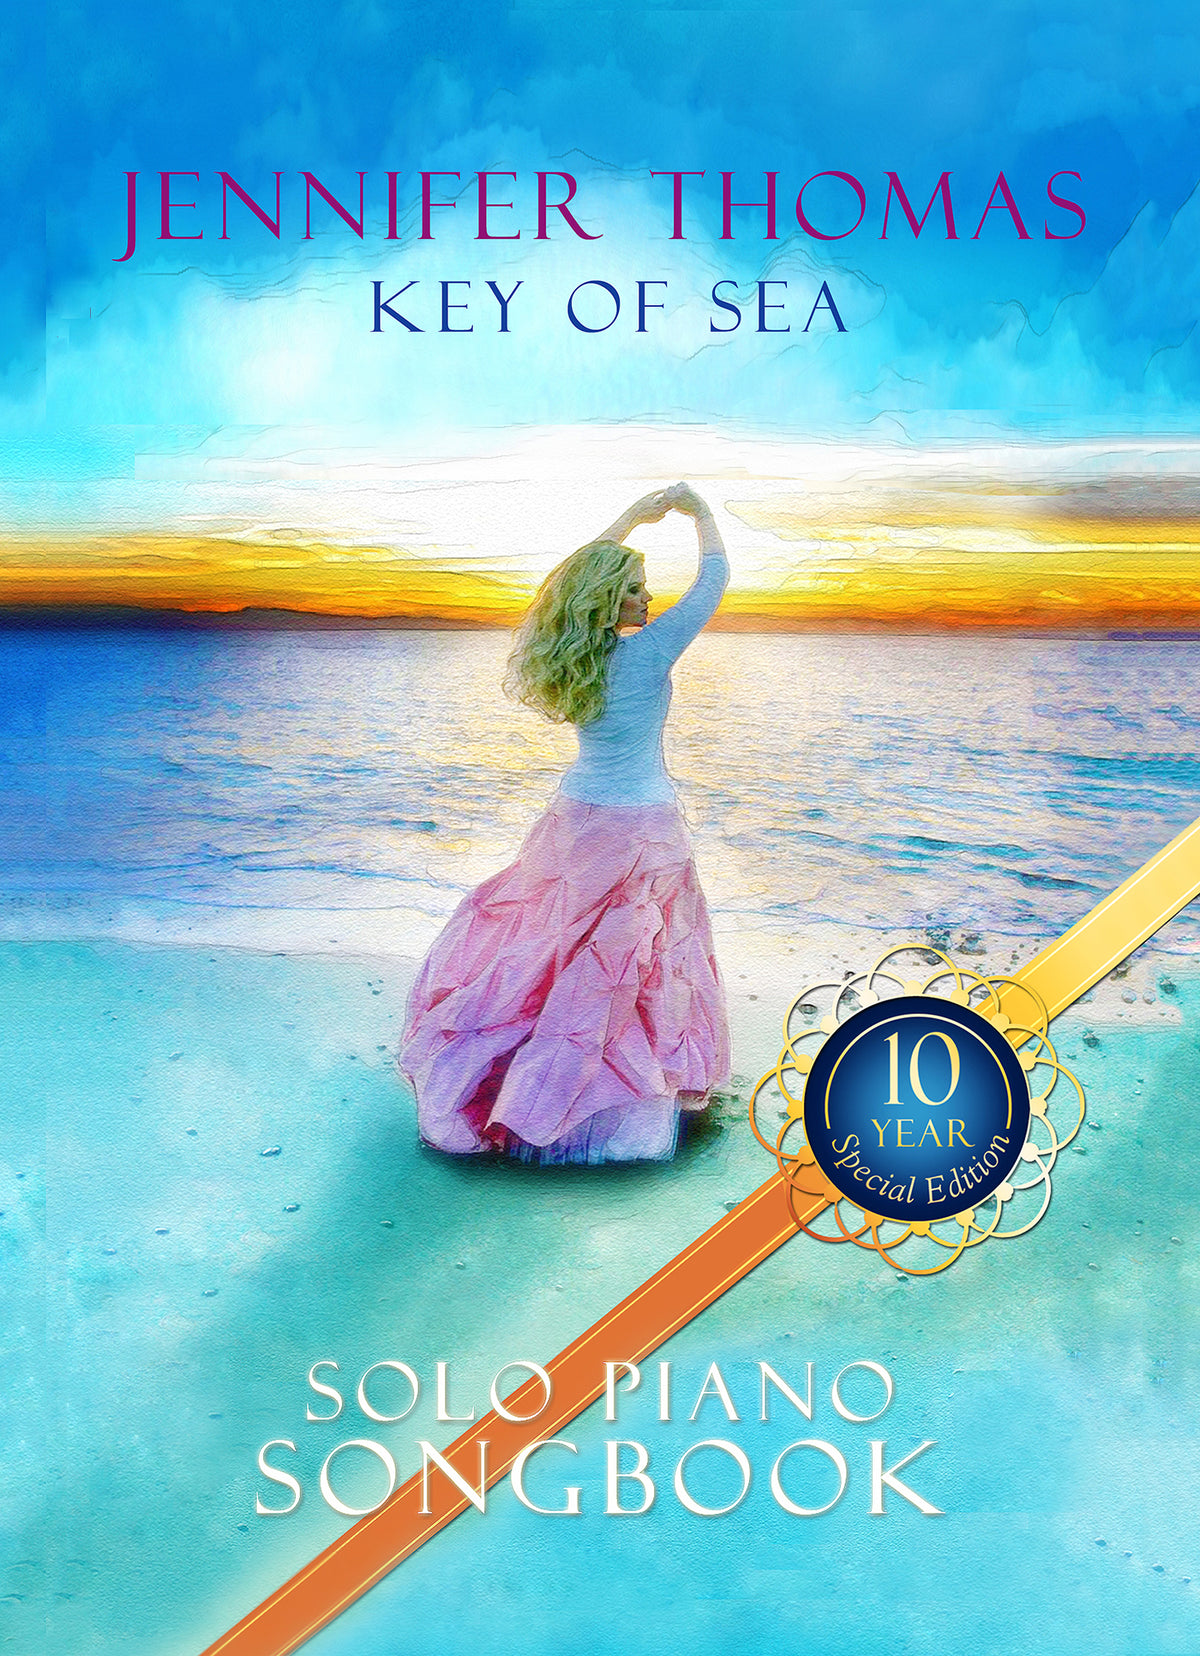 Key of Sea (10 Year Special Edition) Solo Piano Digital Songbook